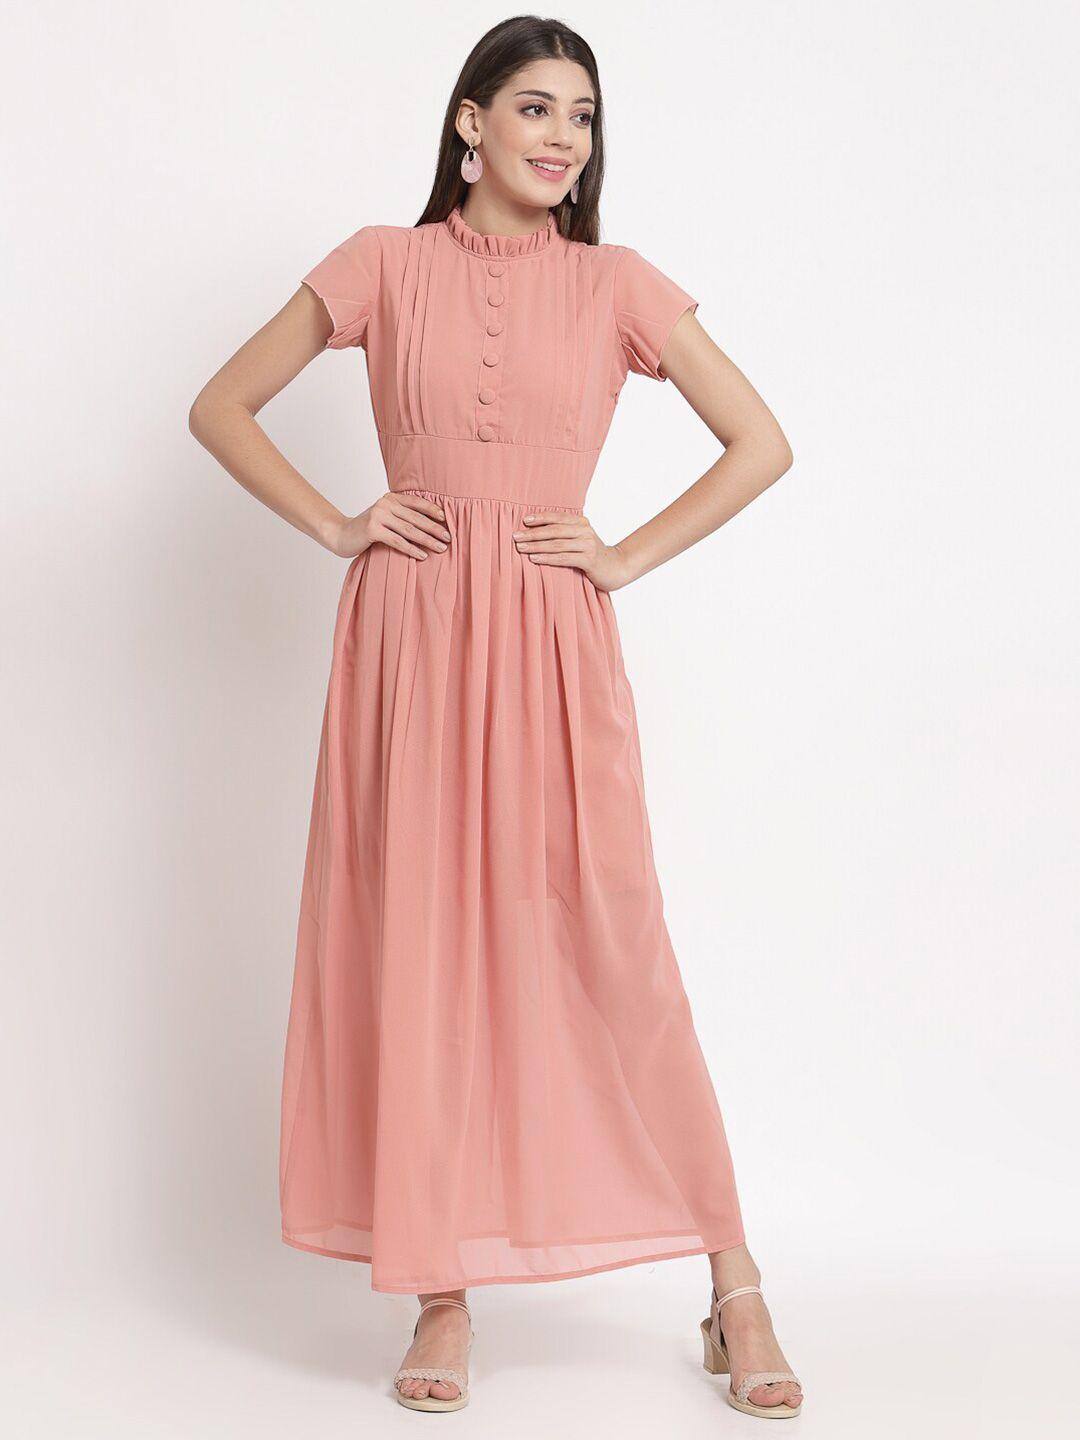 aayu peach-coloured georgette maxi dress